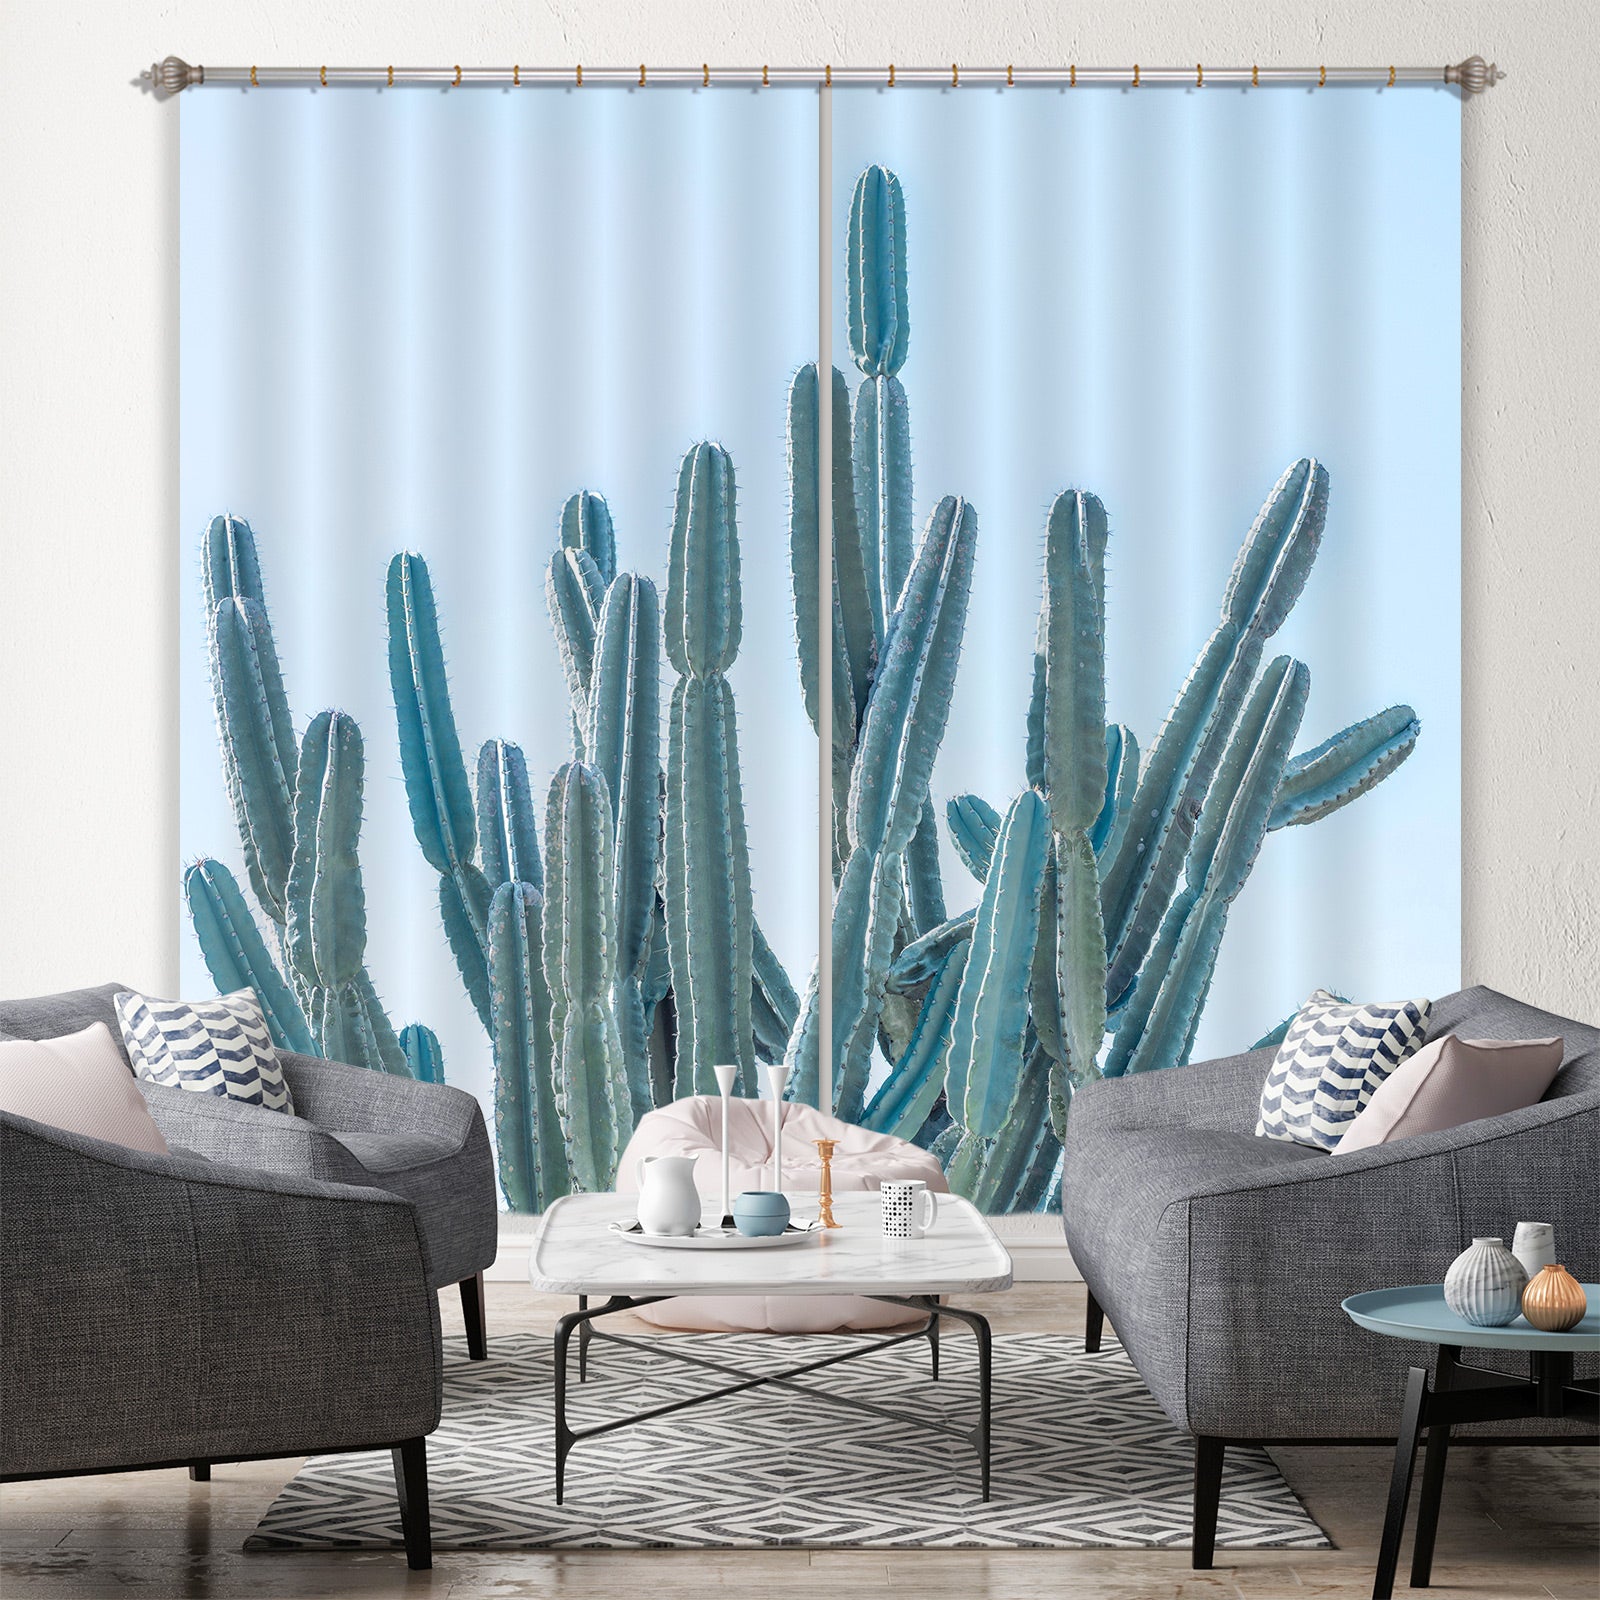 3D Cactus Sky 049 Assaf Frank Curtain Curtains Drapes